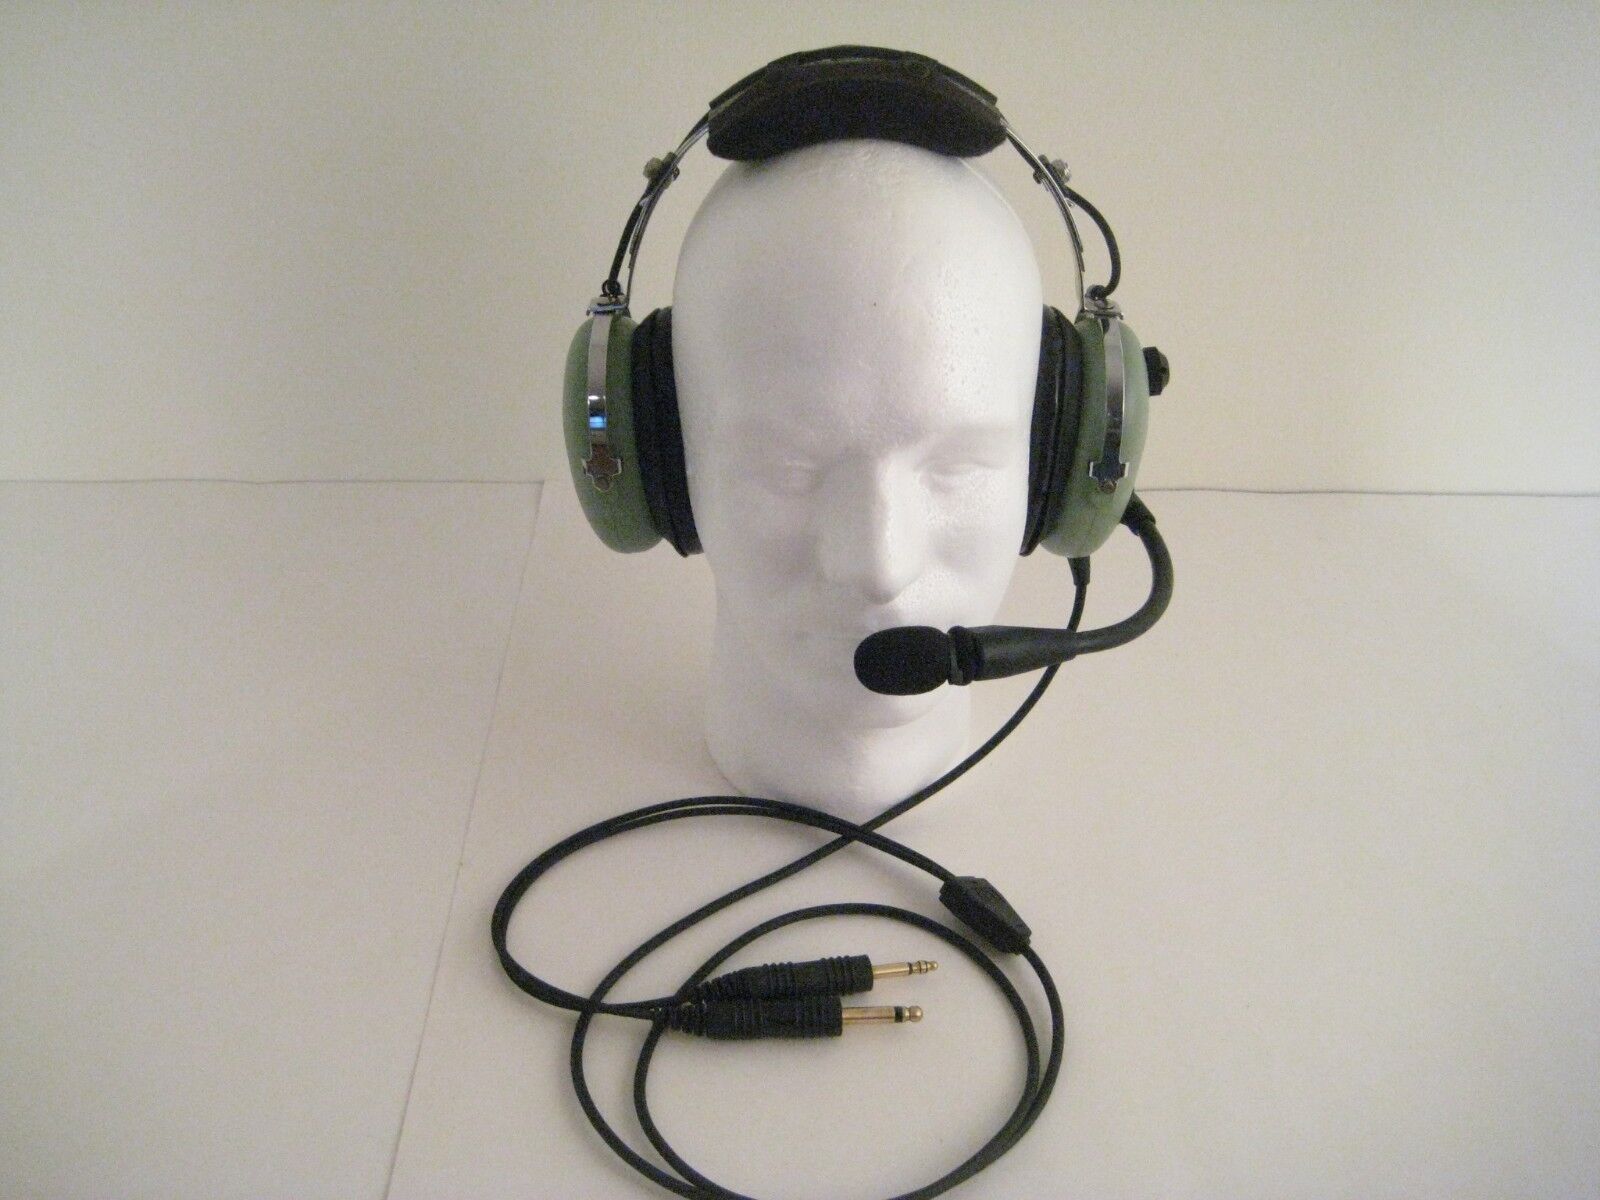 David Clark H10 13.4 Aviation Headset for sale online | eBay